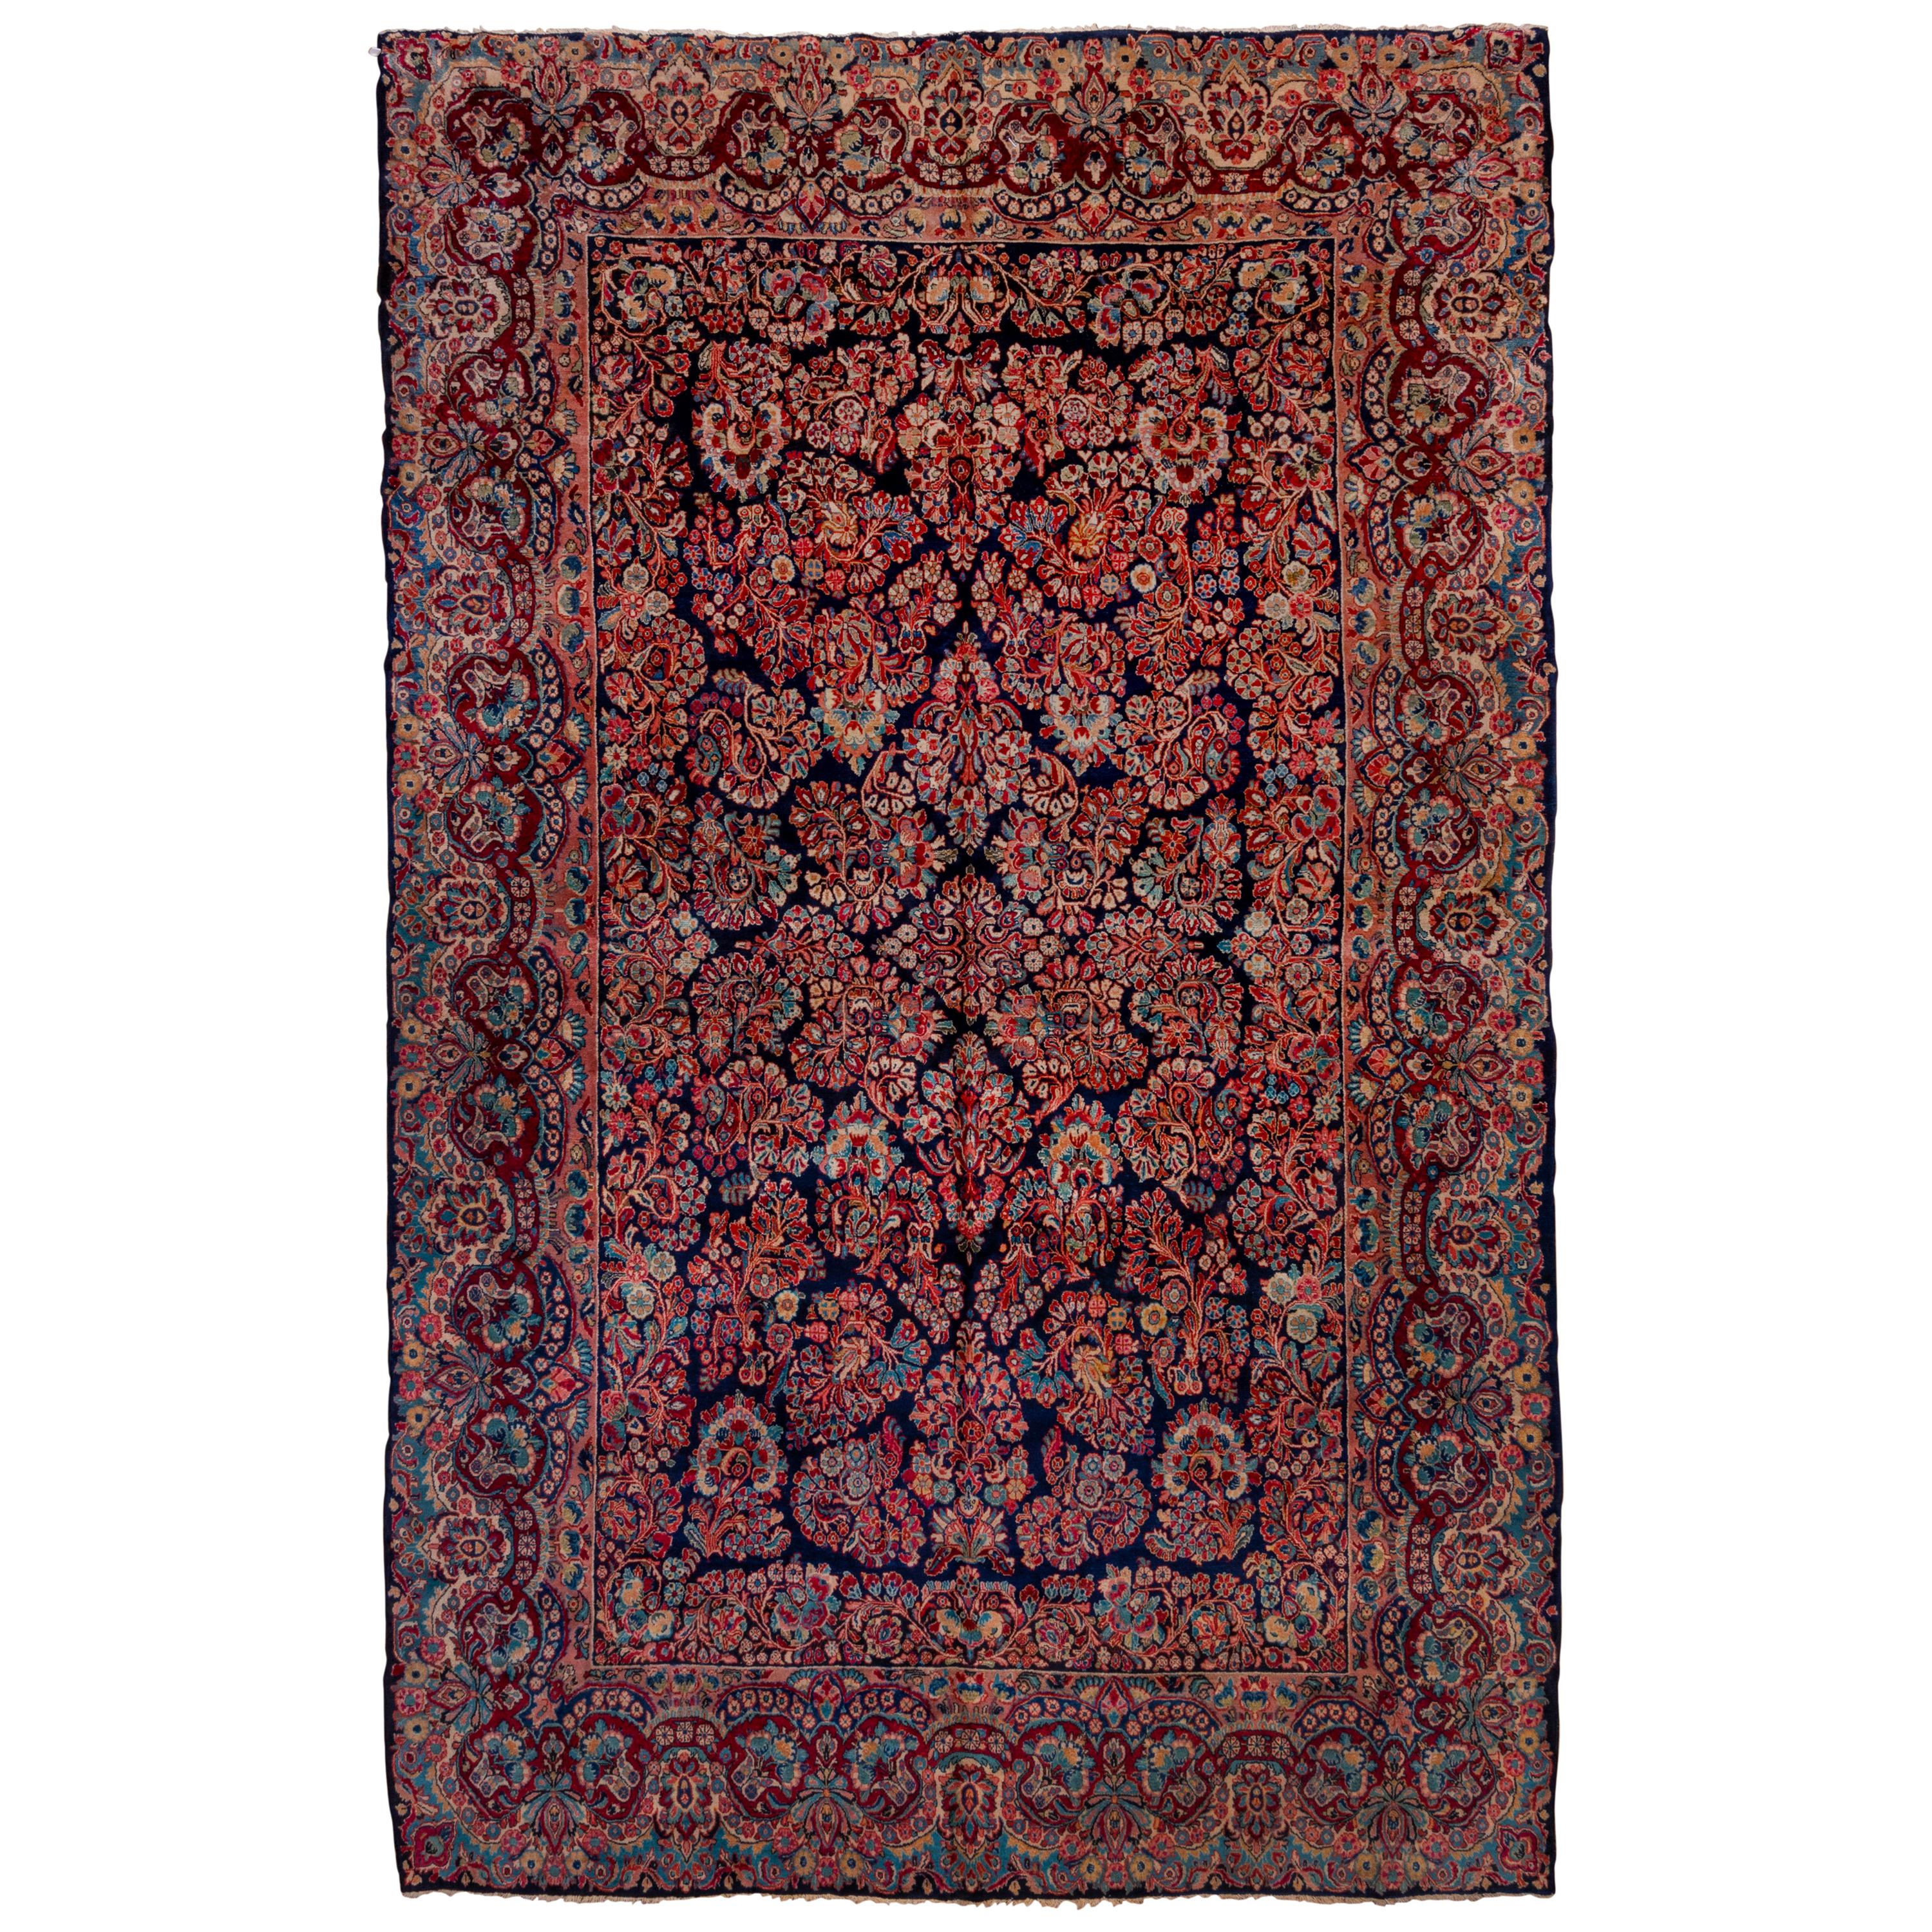 Antique Colorful Persian Sarouk Carpet, All-Over Field, circa 1940s